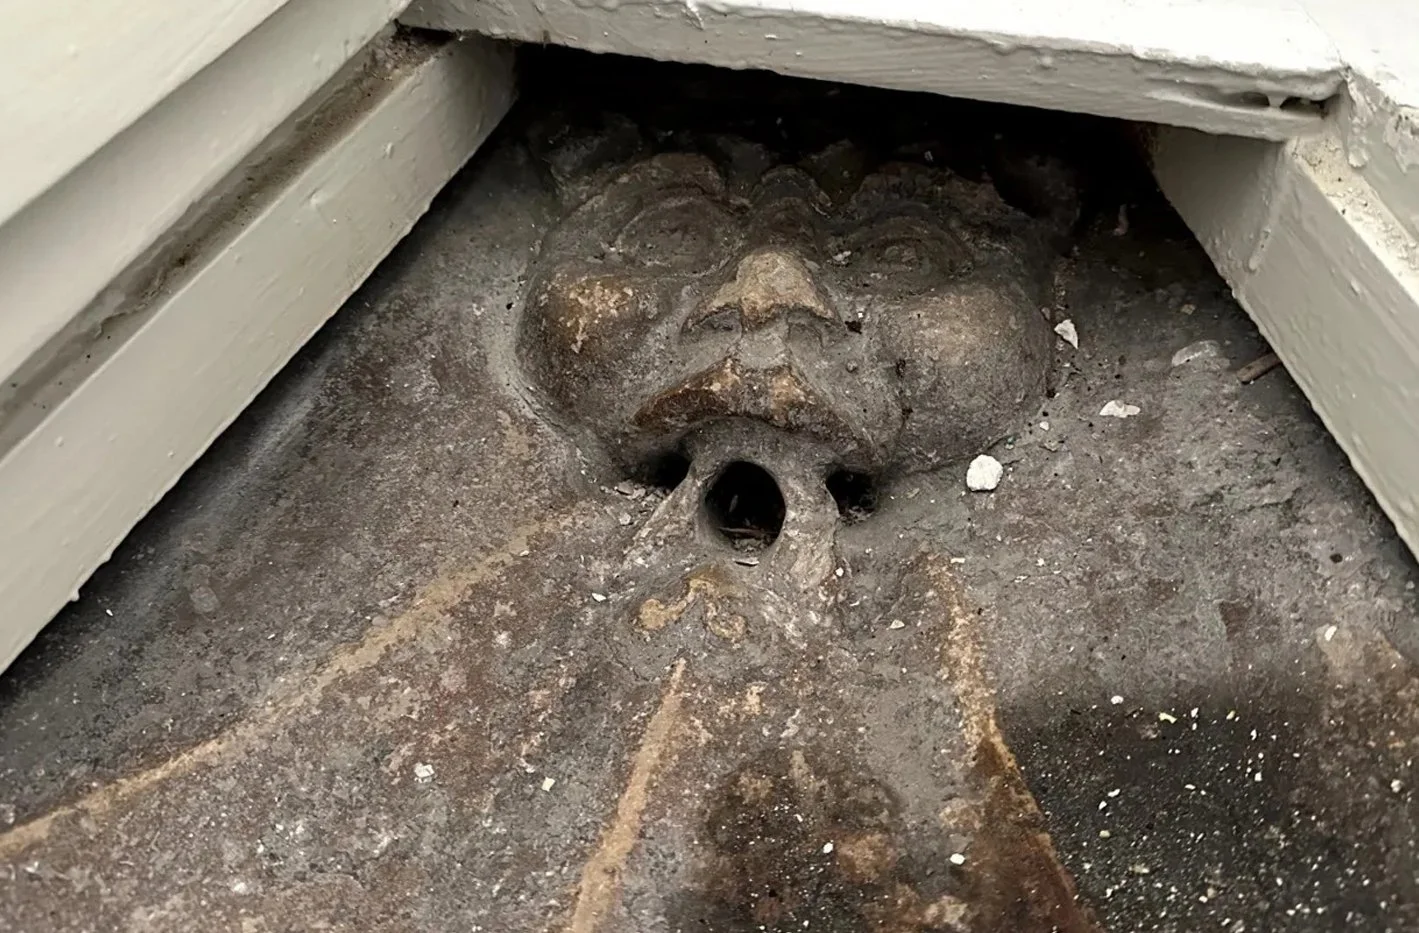 Medieval imp found in hidden trapdoor above toilet